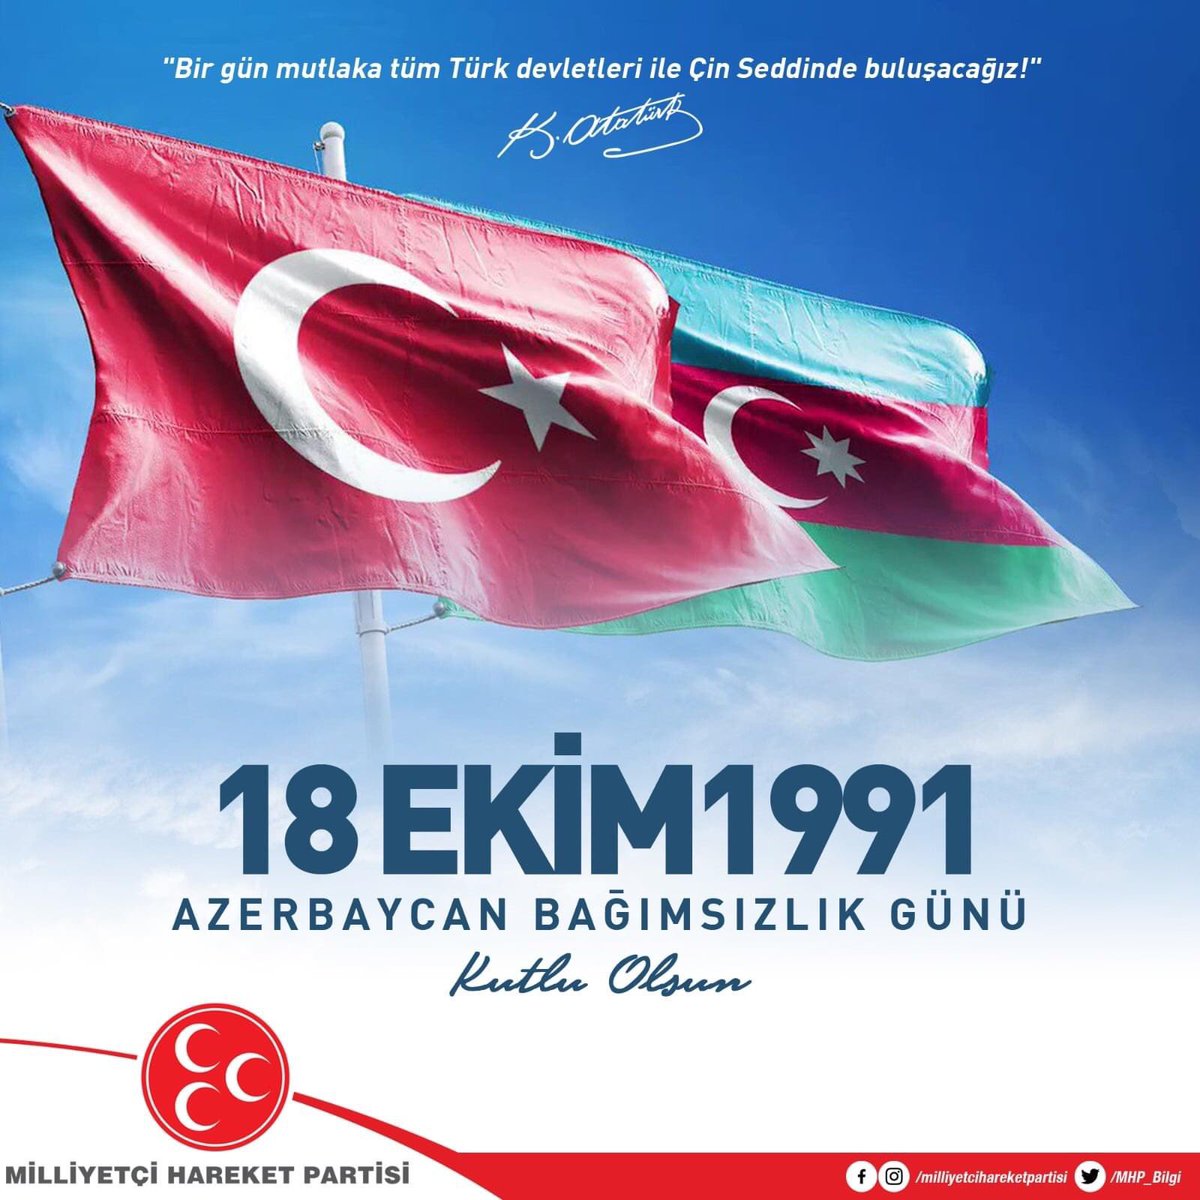 Can Azerbaycan'ın 18 Ekim Bağımsızlık Günü kutlu olsun.🇦🇿🇹🇷

İki bedende bir can Türkiye Azerbaycan.

🇹🇷İki Devlet Tek Millet🇦🇿

“Durduqça bədəndə can, yaşa yaşa cox yaşa ey şanlı Azərbaycan!”

#AzerbayCANdır #AzerbaycanYalnızDeğildir